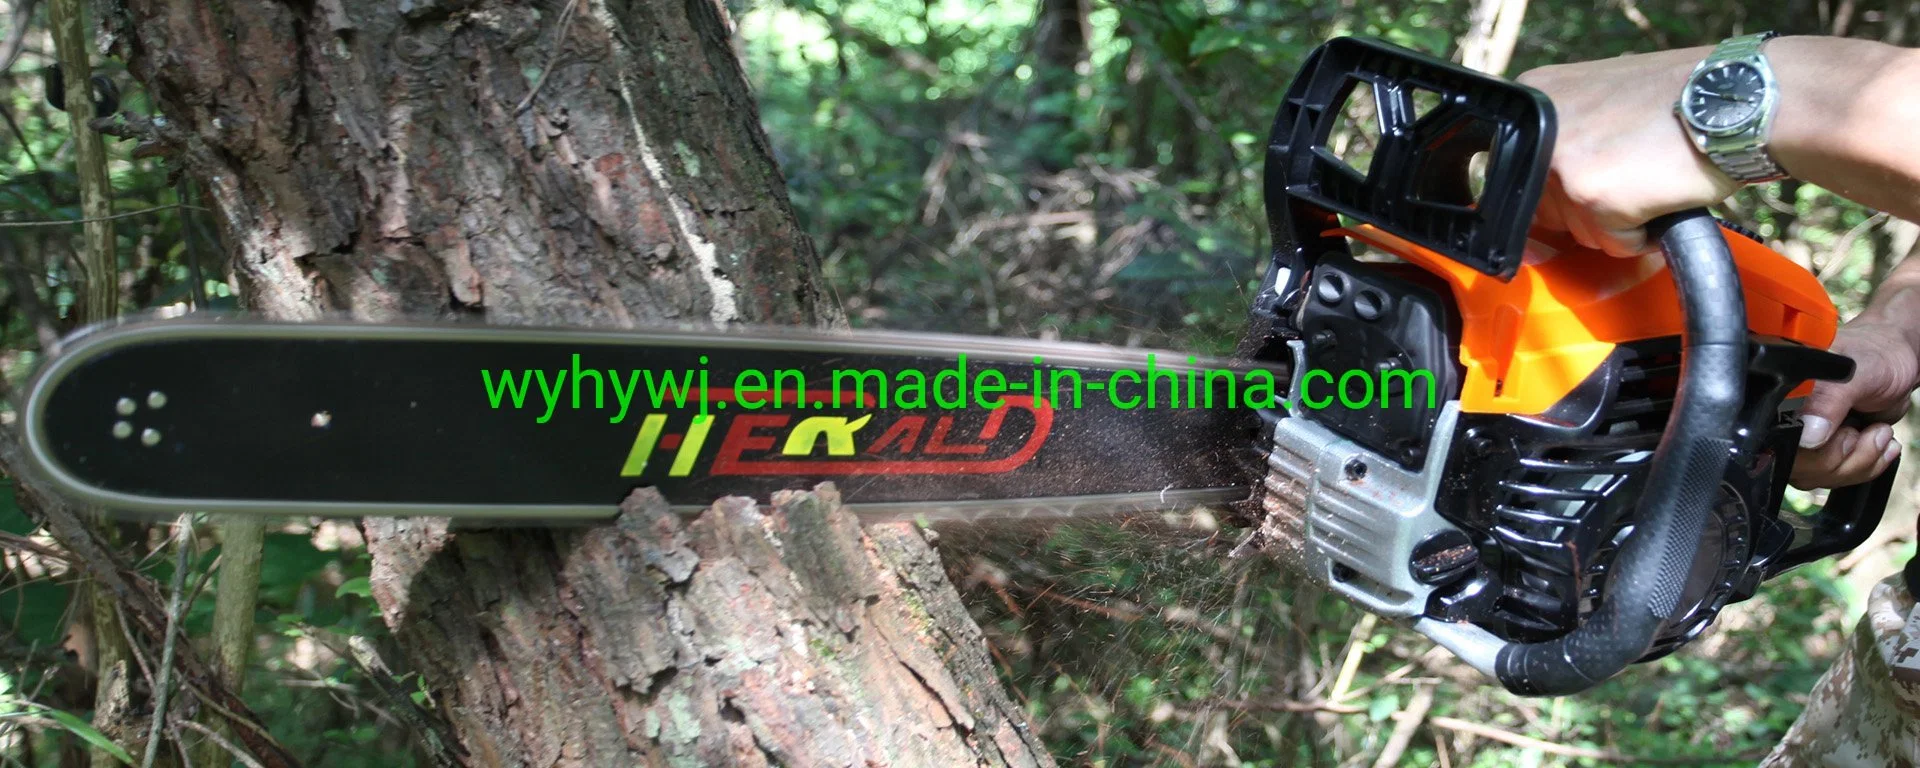 2021 Hot Sell 52cc 58cc Turkey Gasoline Chain Saw Cutting Woods Easily Machine New Design Saw